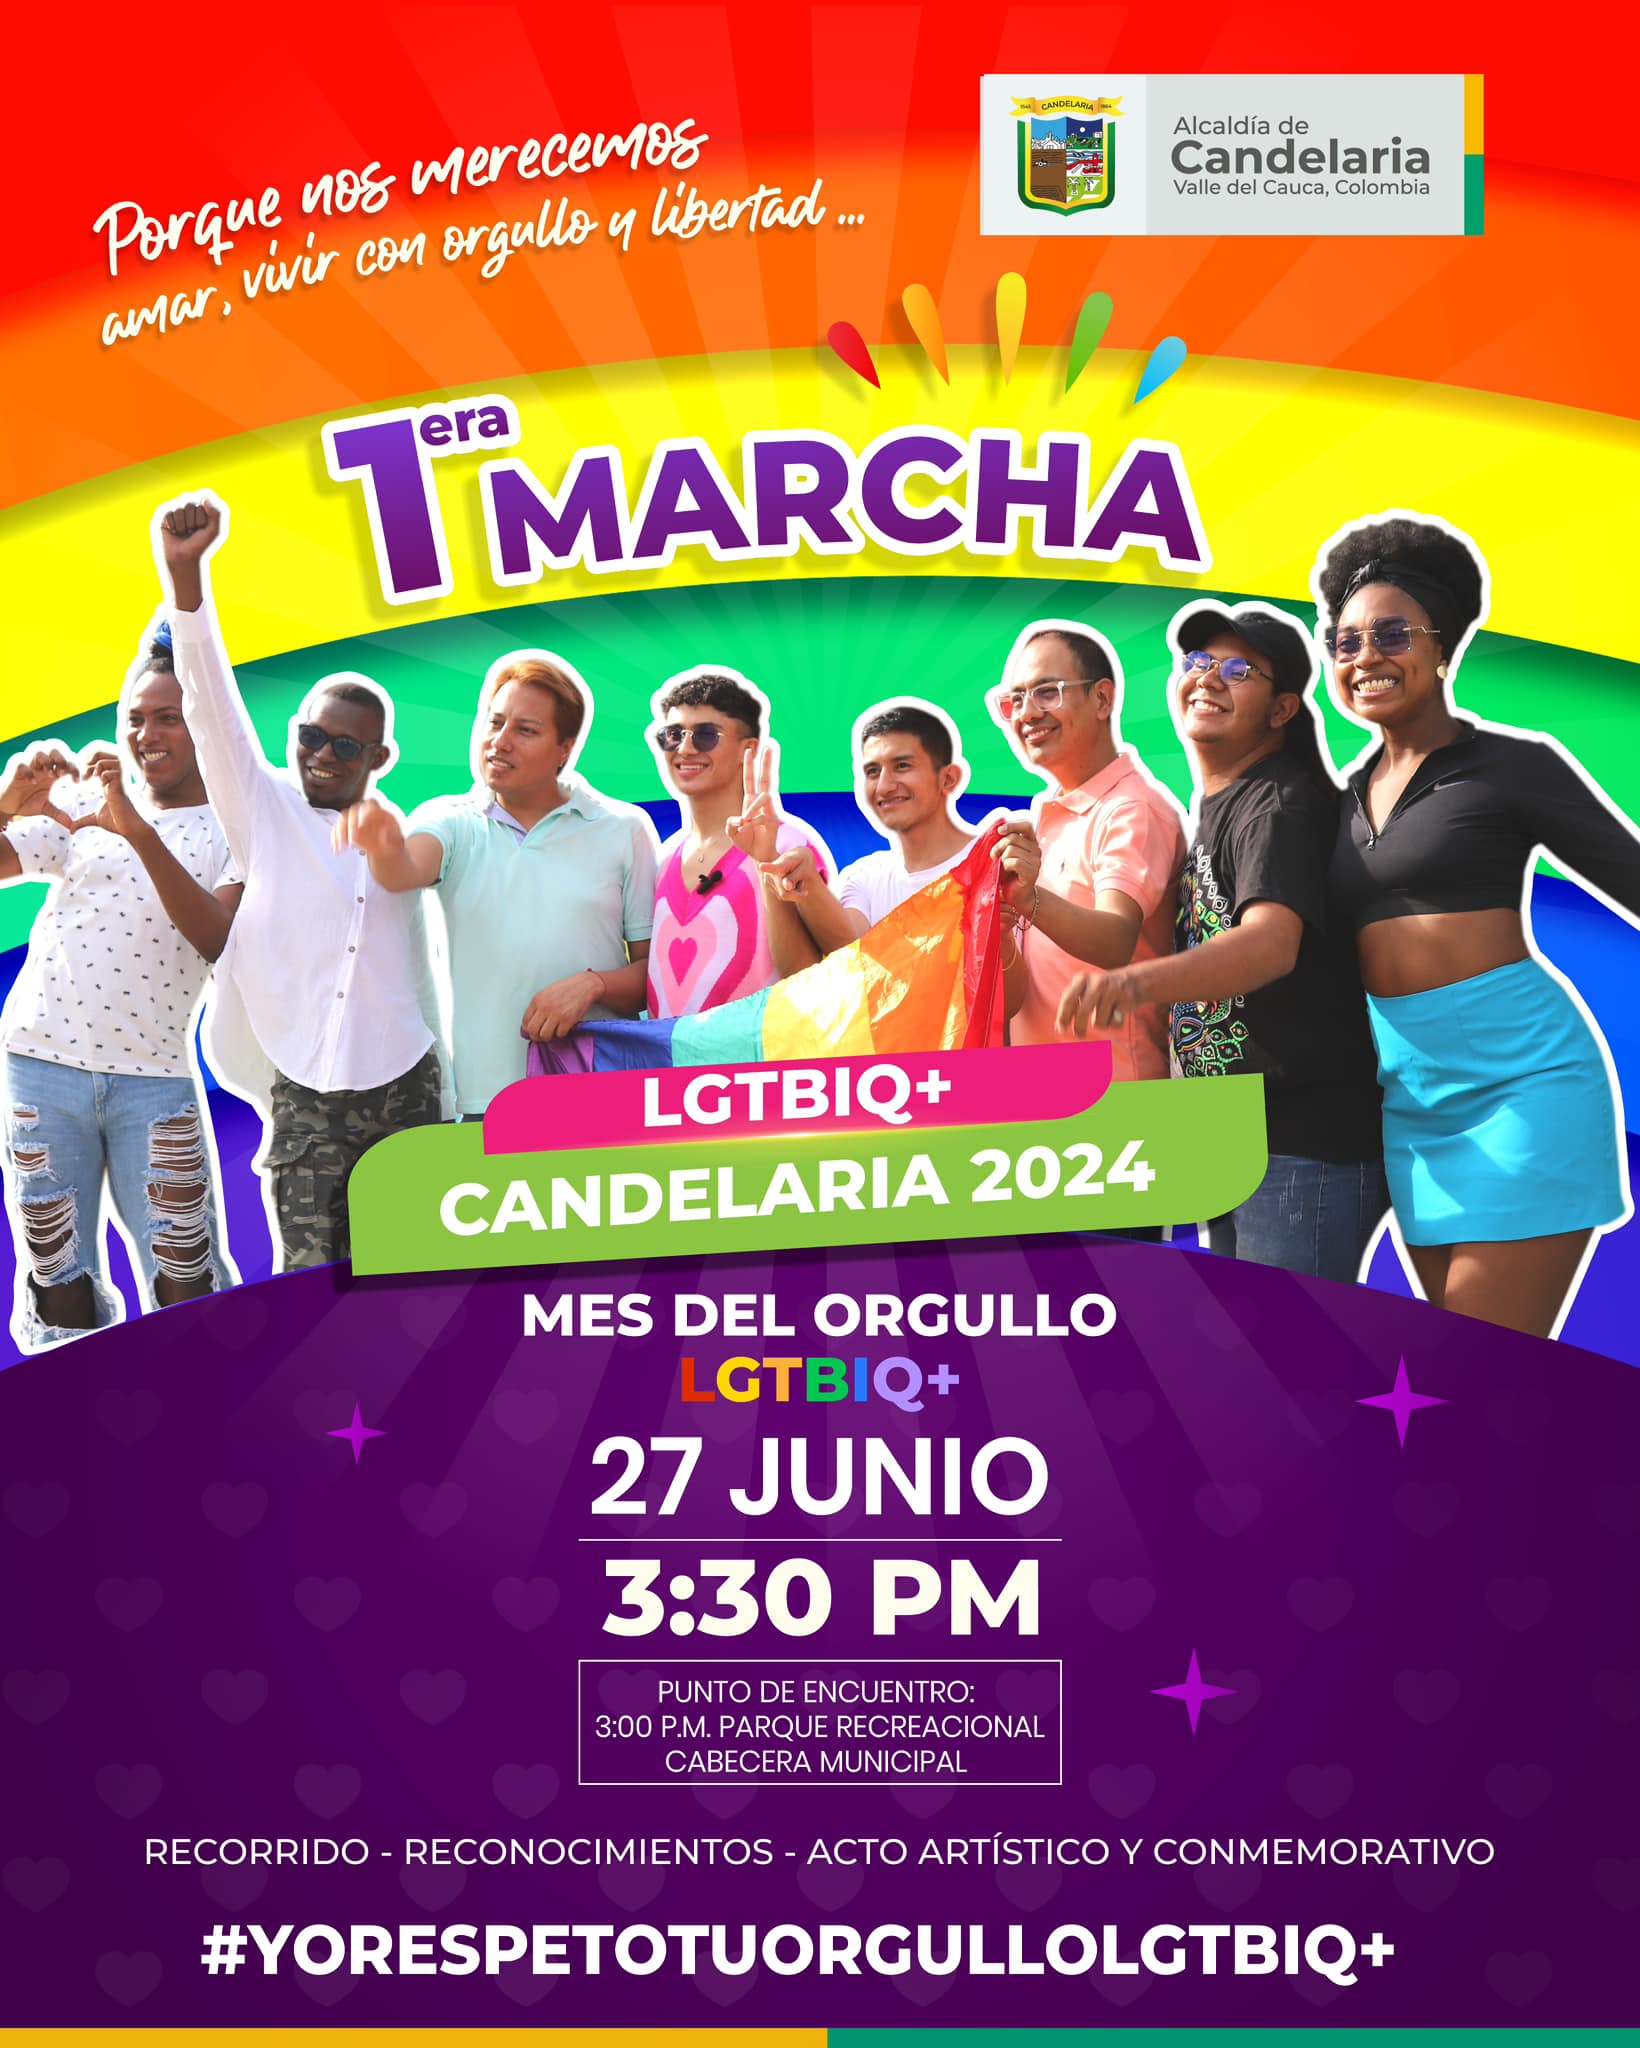 1 Marcha LGBTIQ+ Candelaria 2024